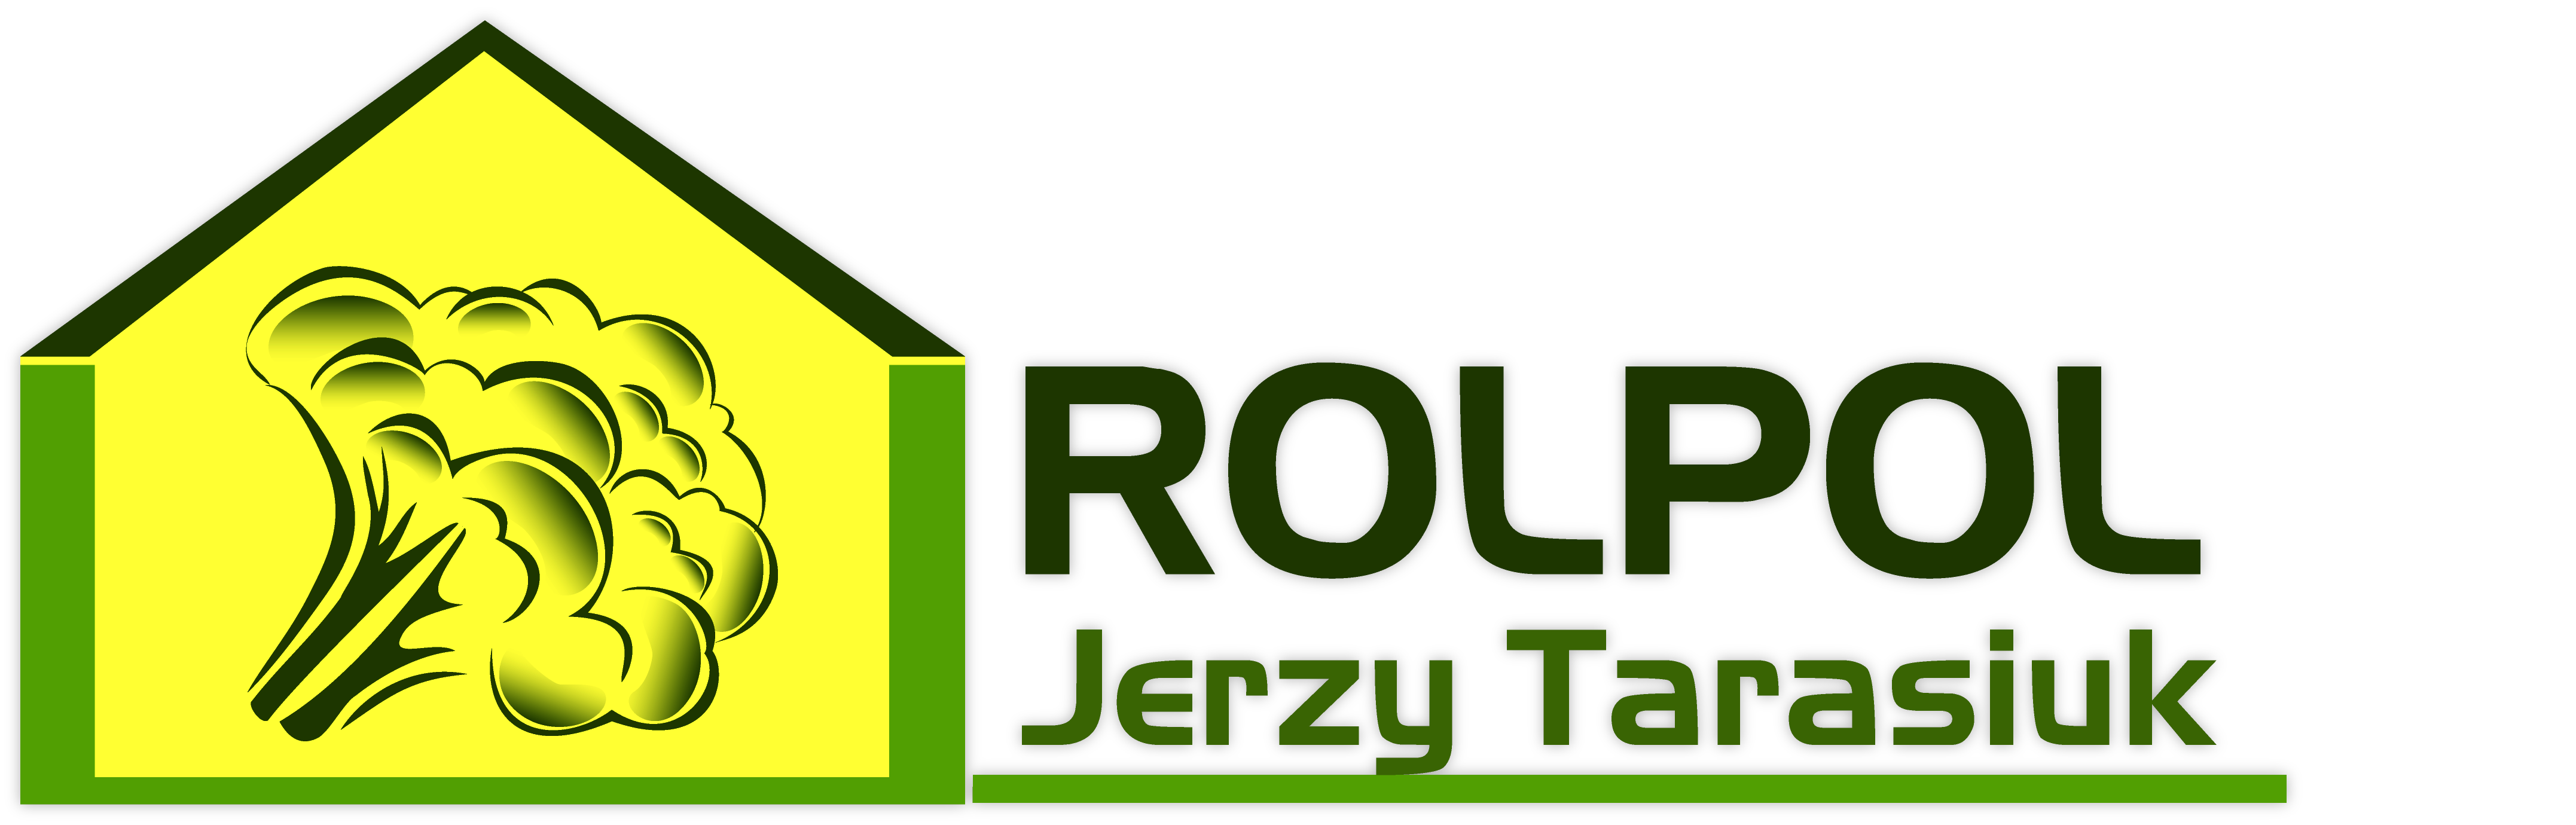 Rolpol logo